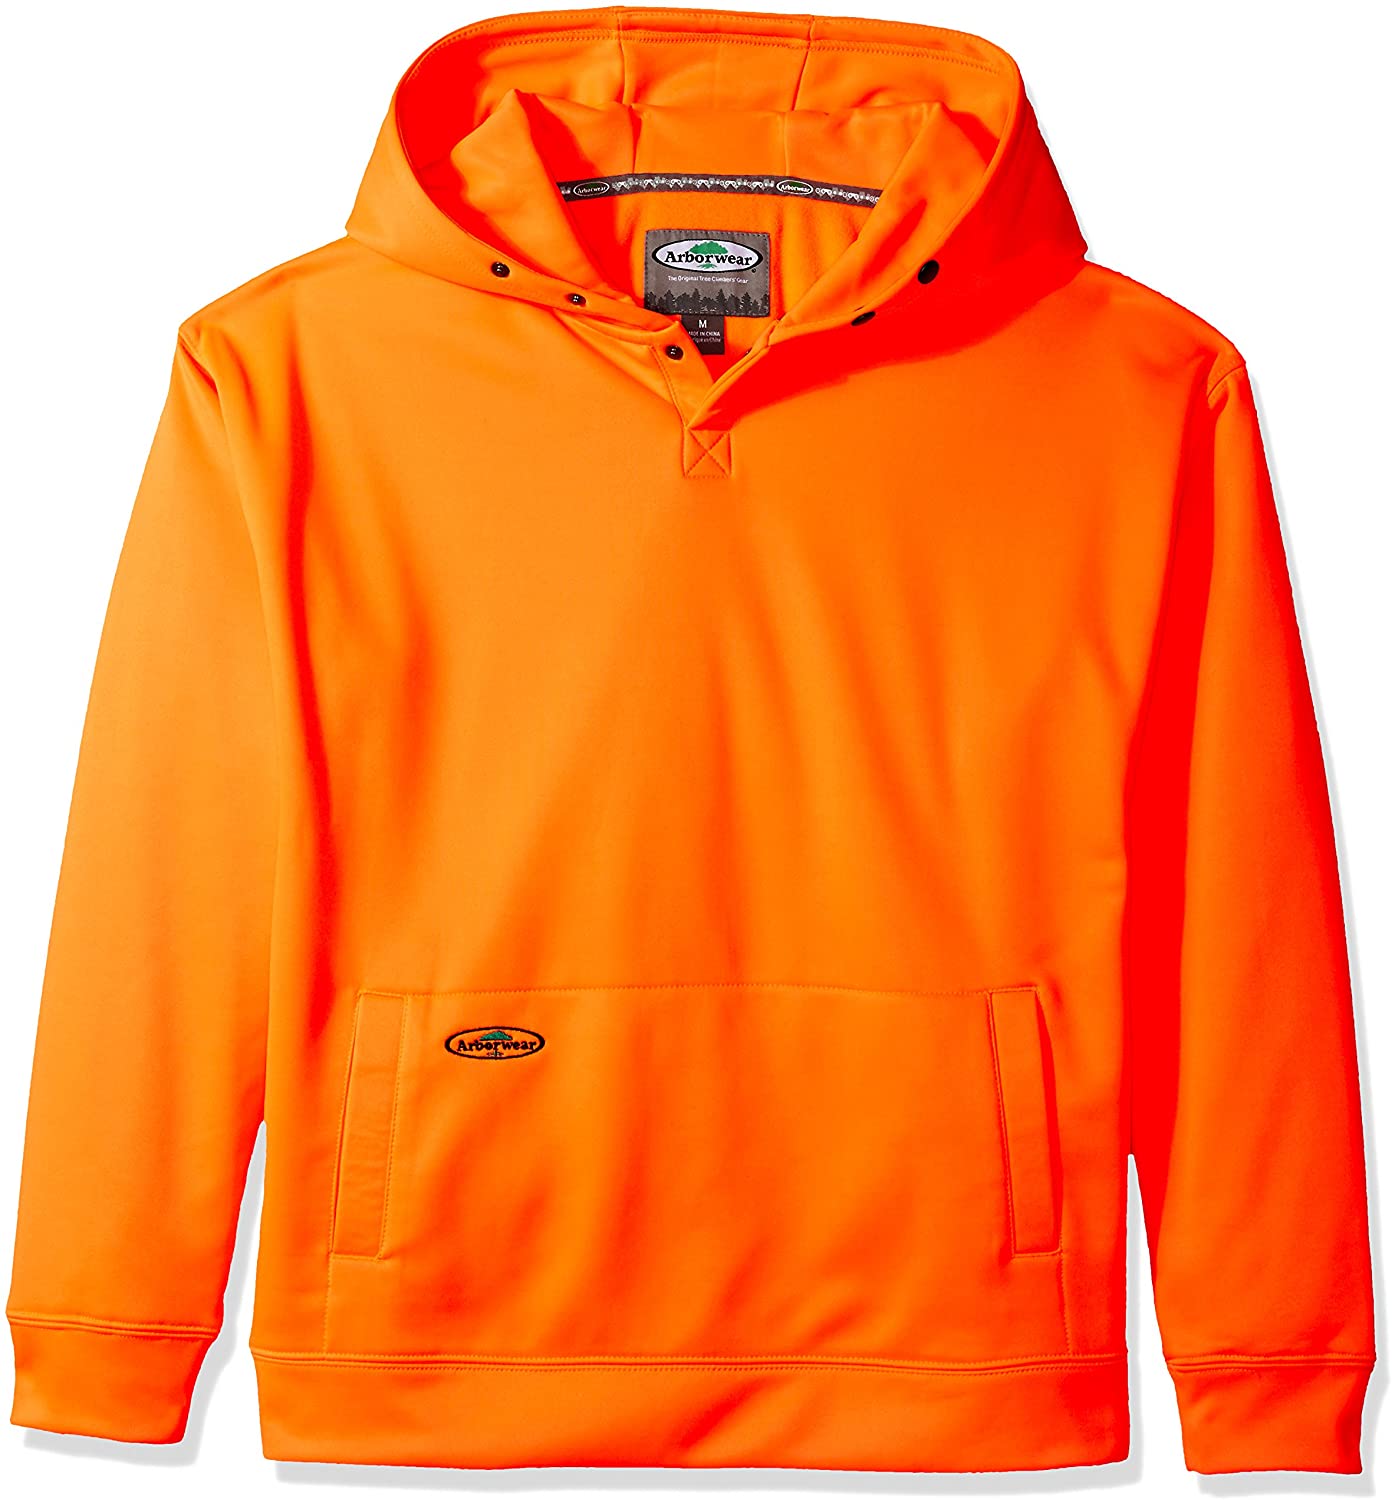 Men's Arborwear Tech Double Thick Pullover in Safety Orange